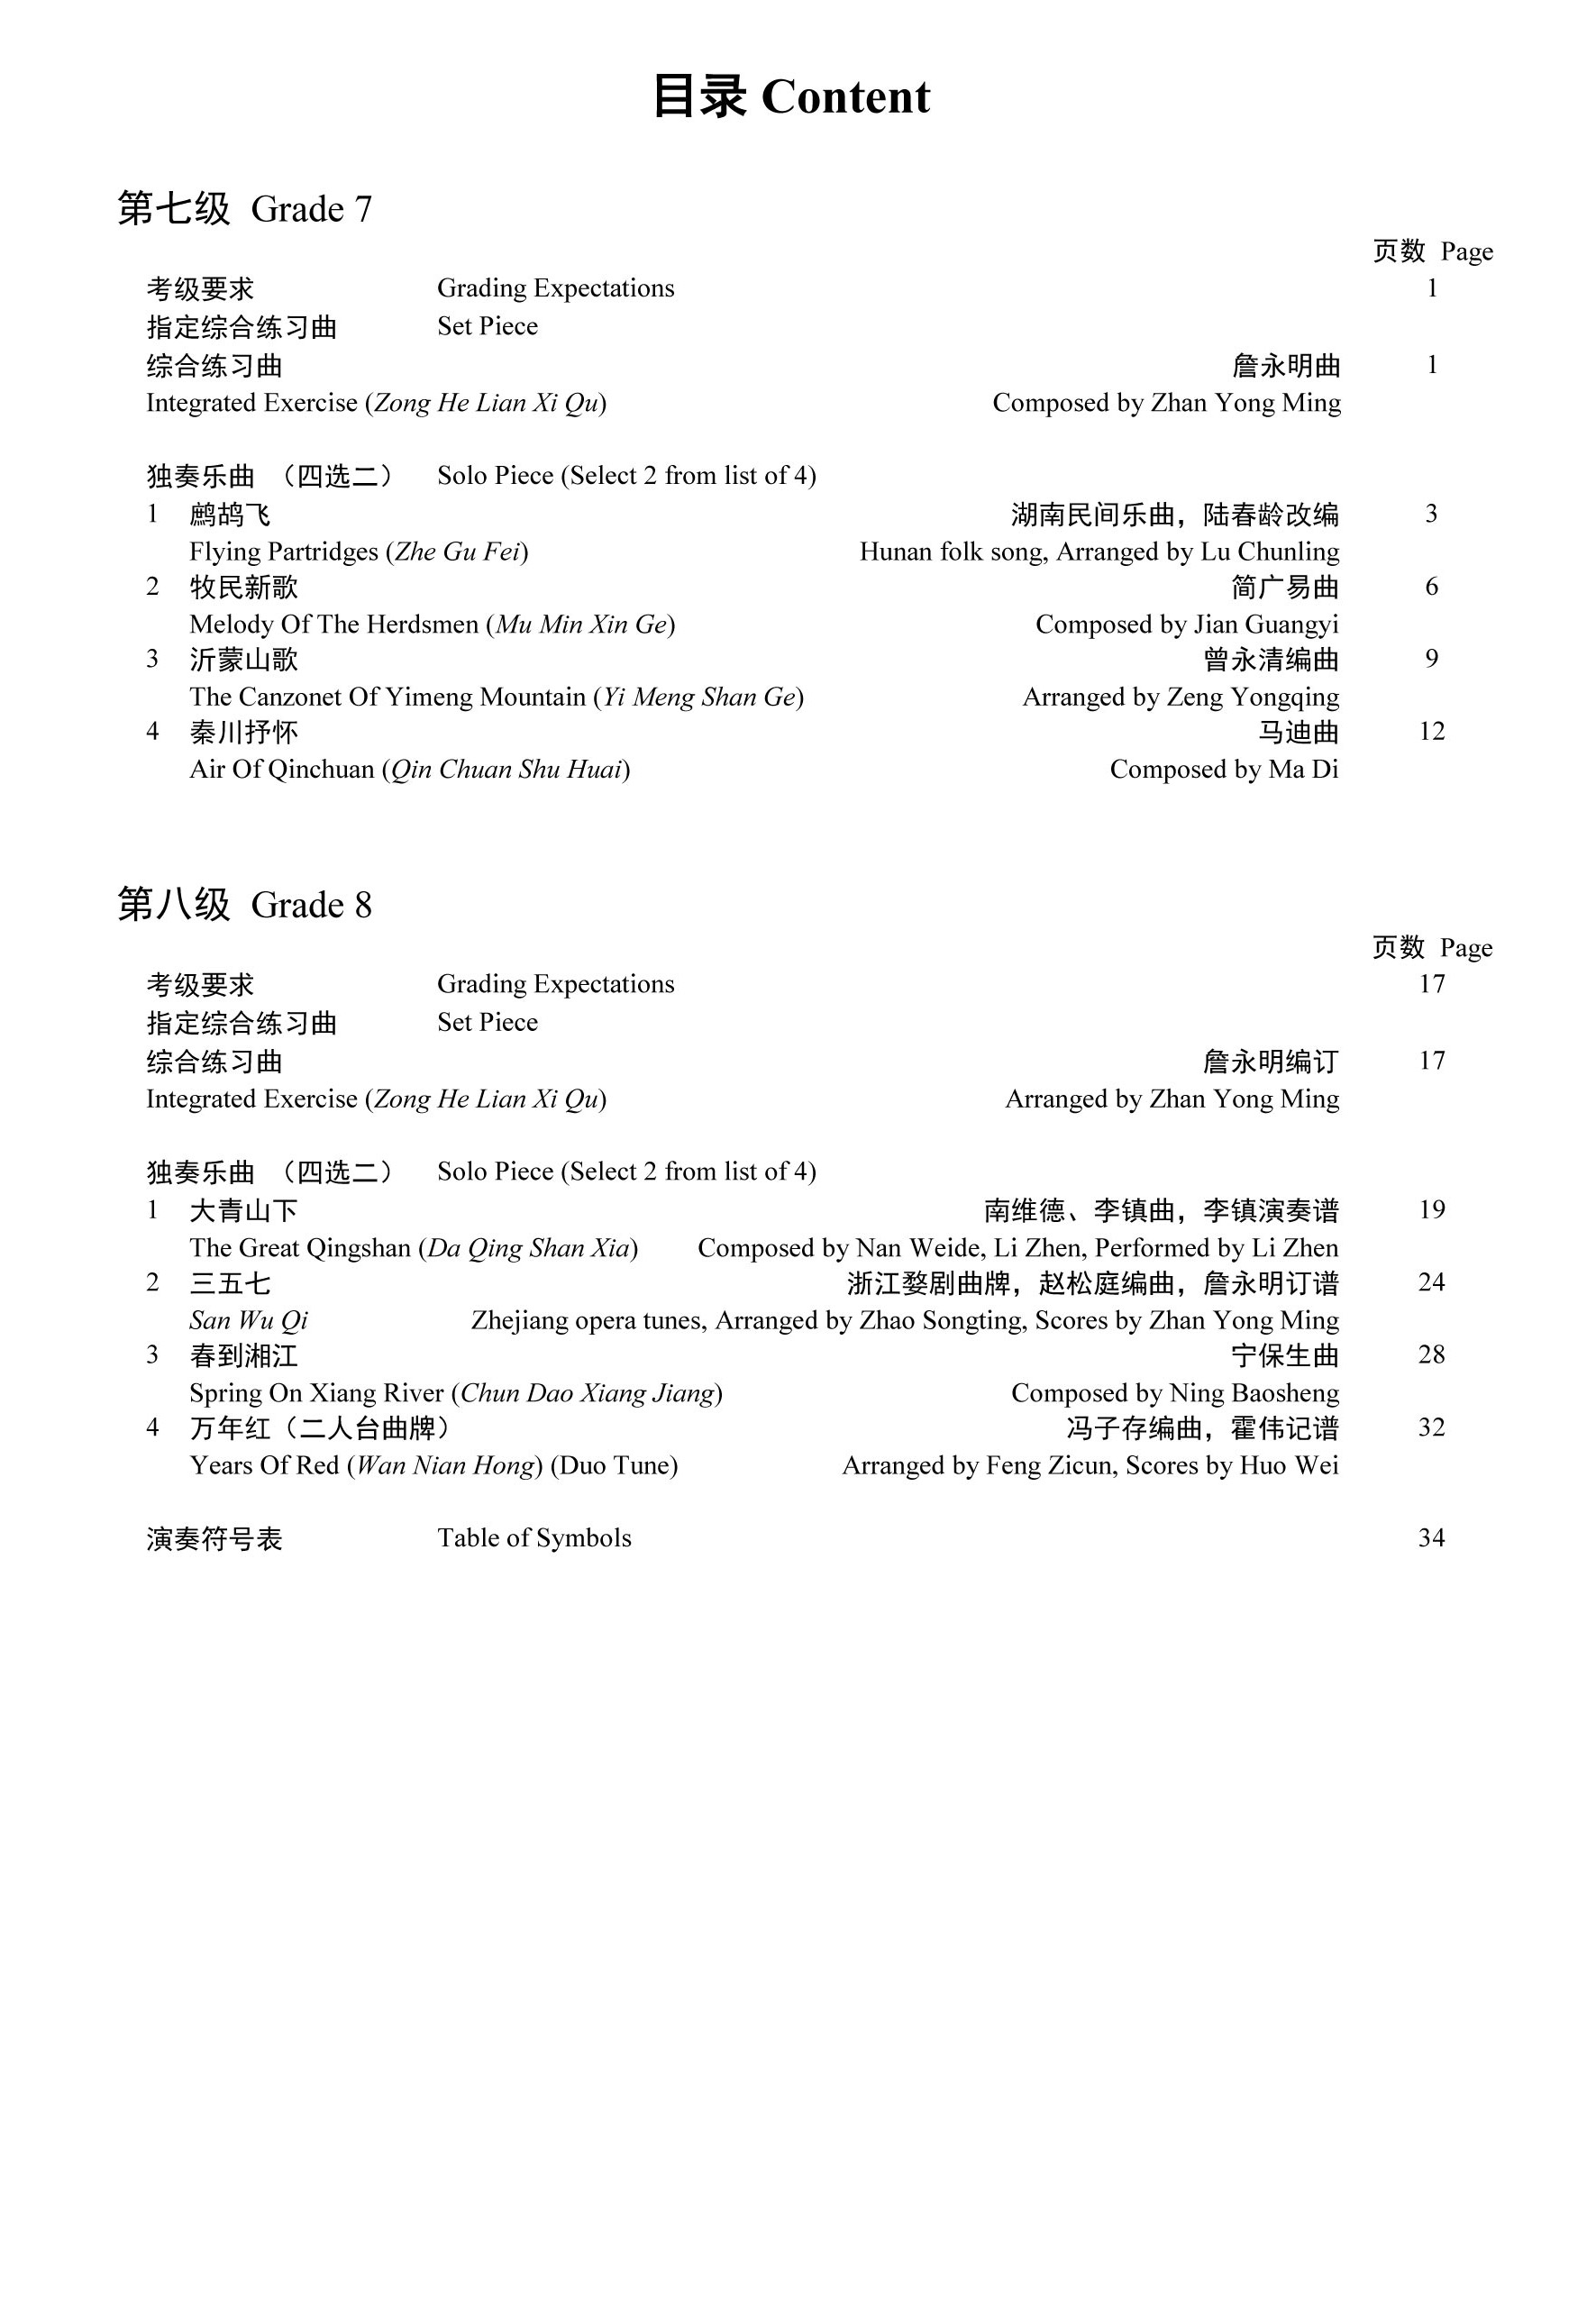 Dizi Grading Examination Book by Teng (Intermediate Grade 7-8) Content Page